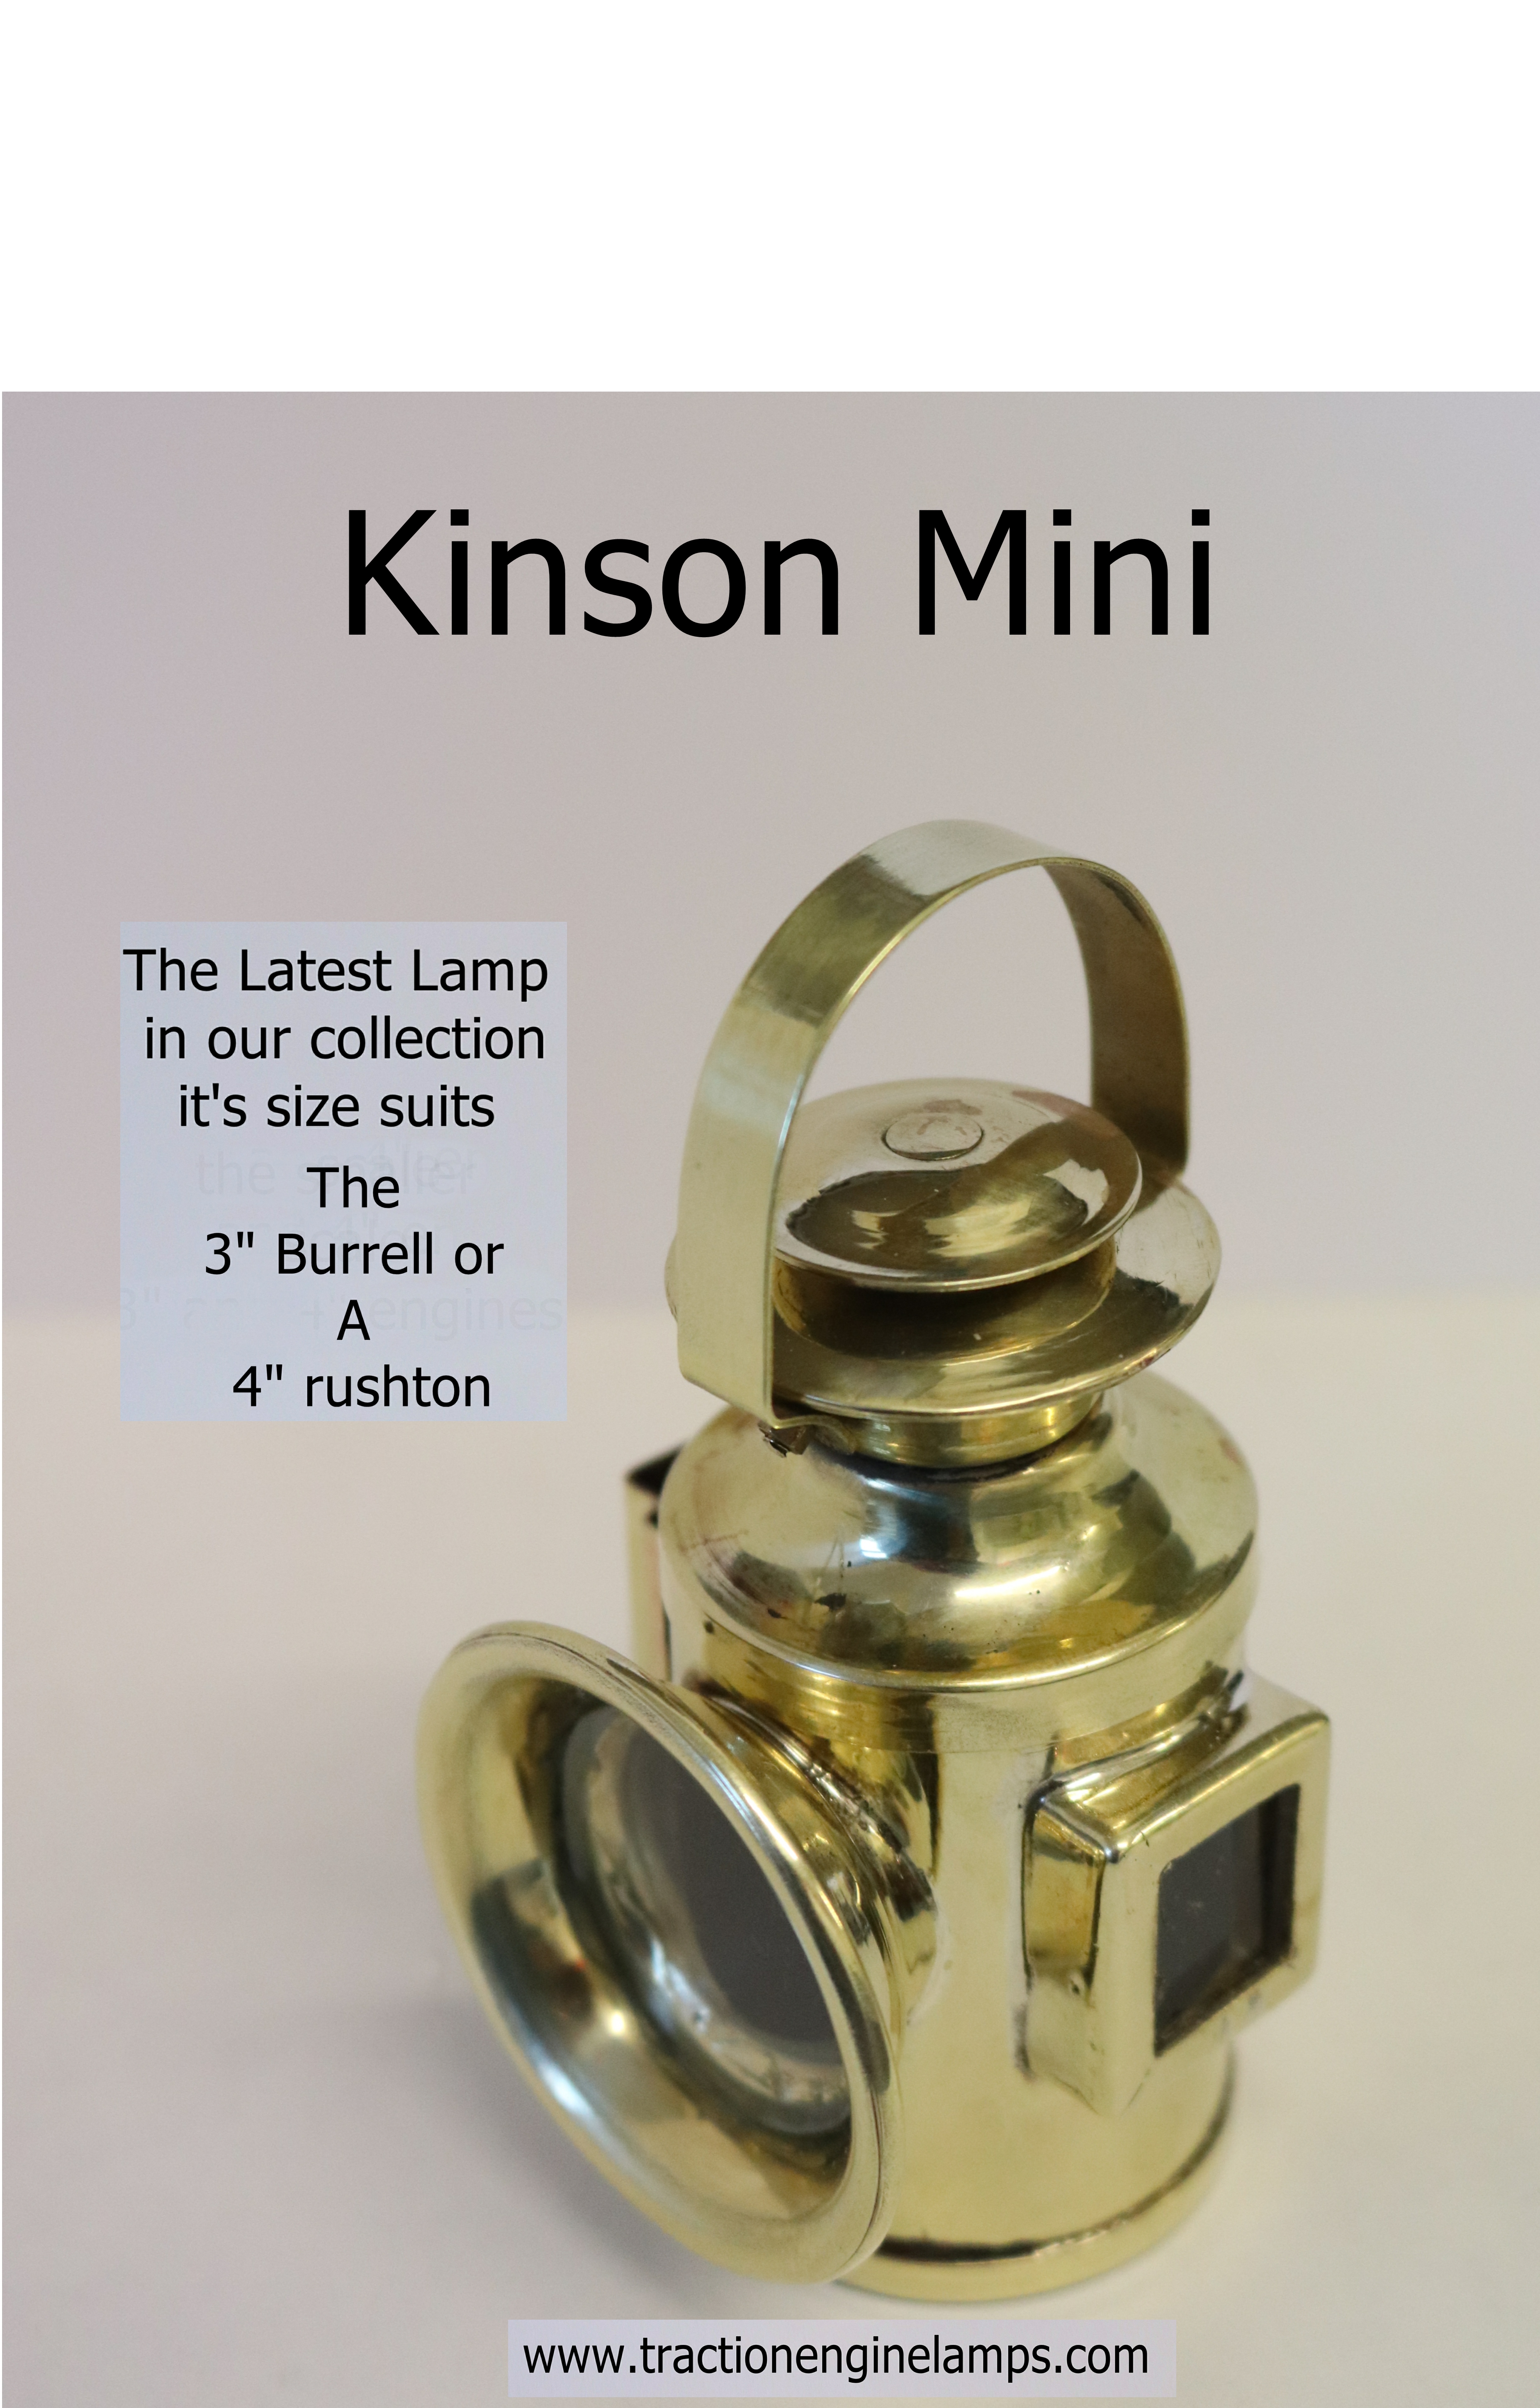 Kinson mini